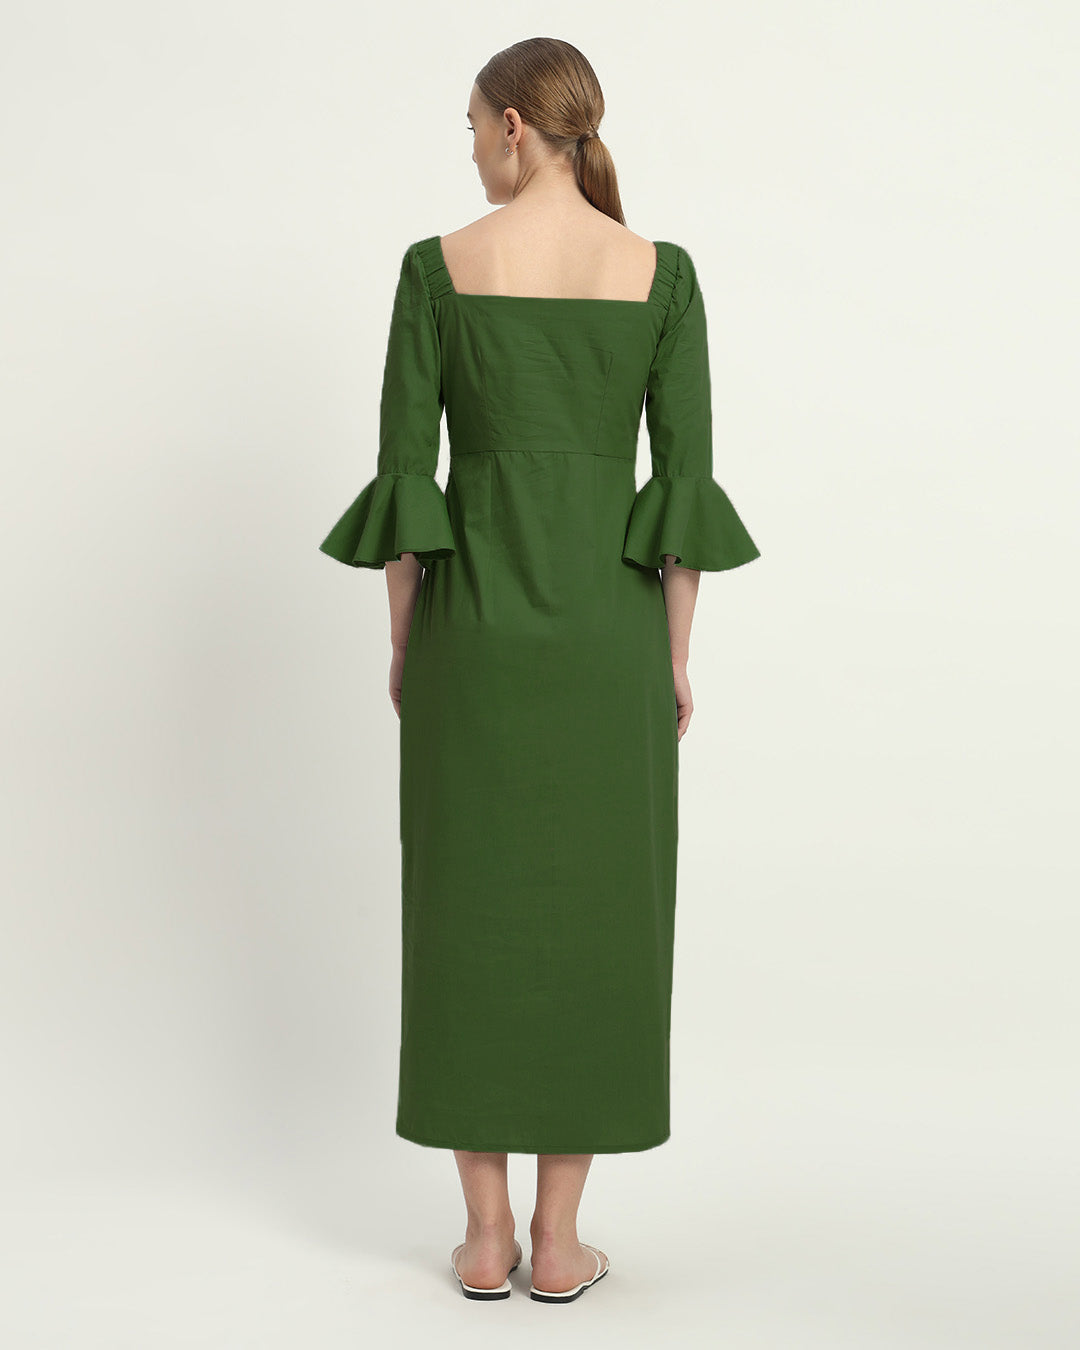 The Rosendale Emerald Cotton Dress